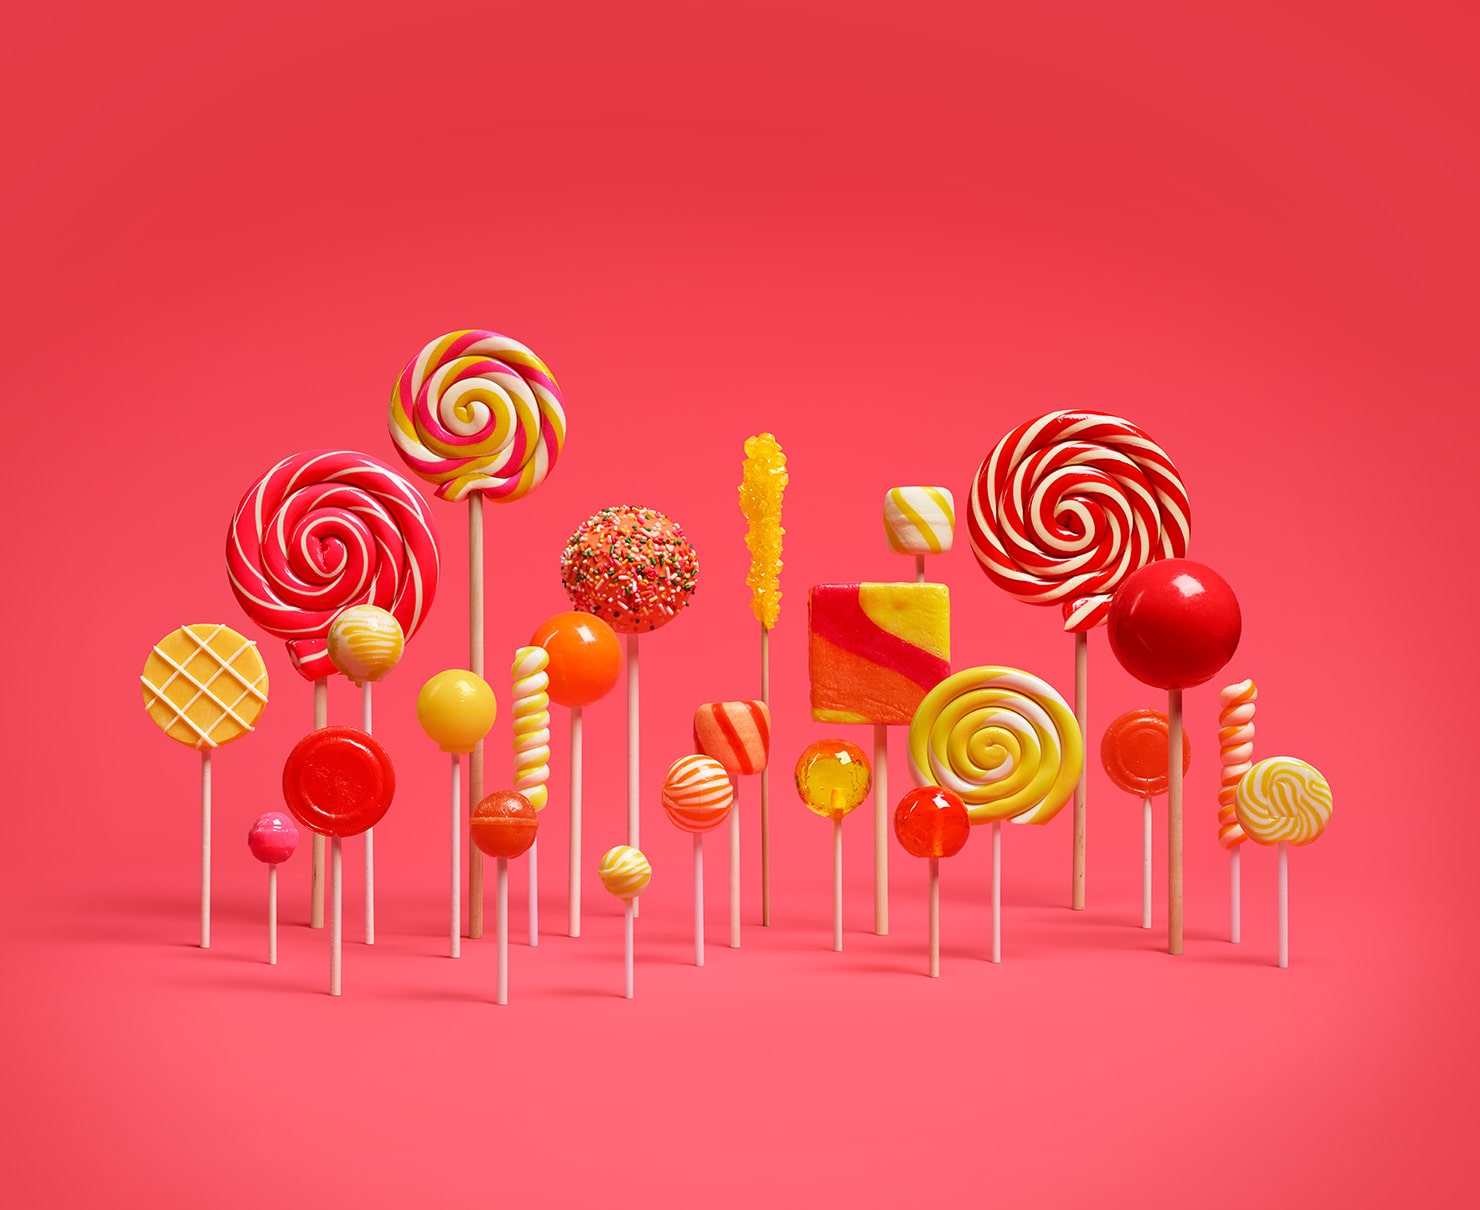 Como usar o Smart Lock do Android 5.0 Lollipop?